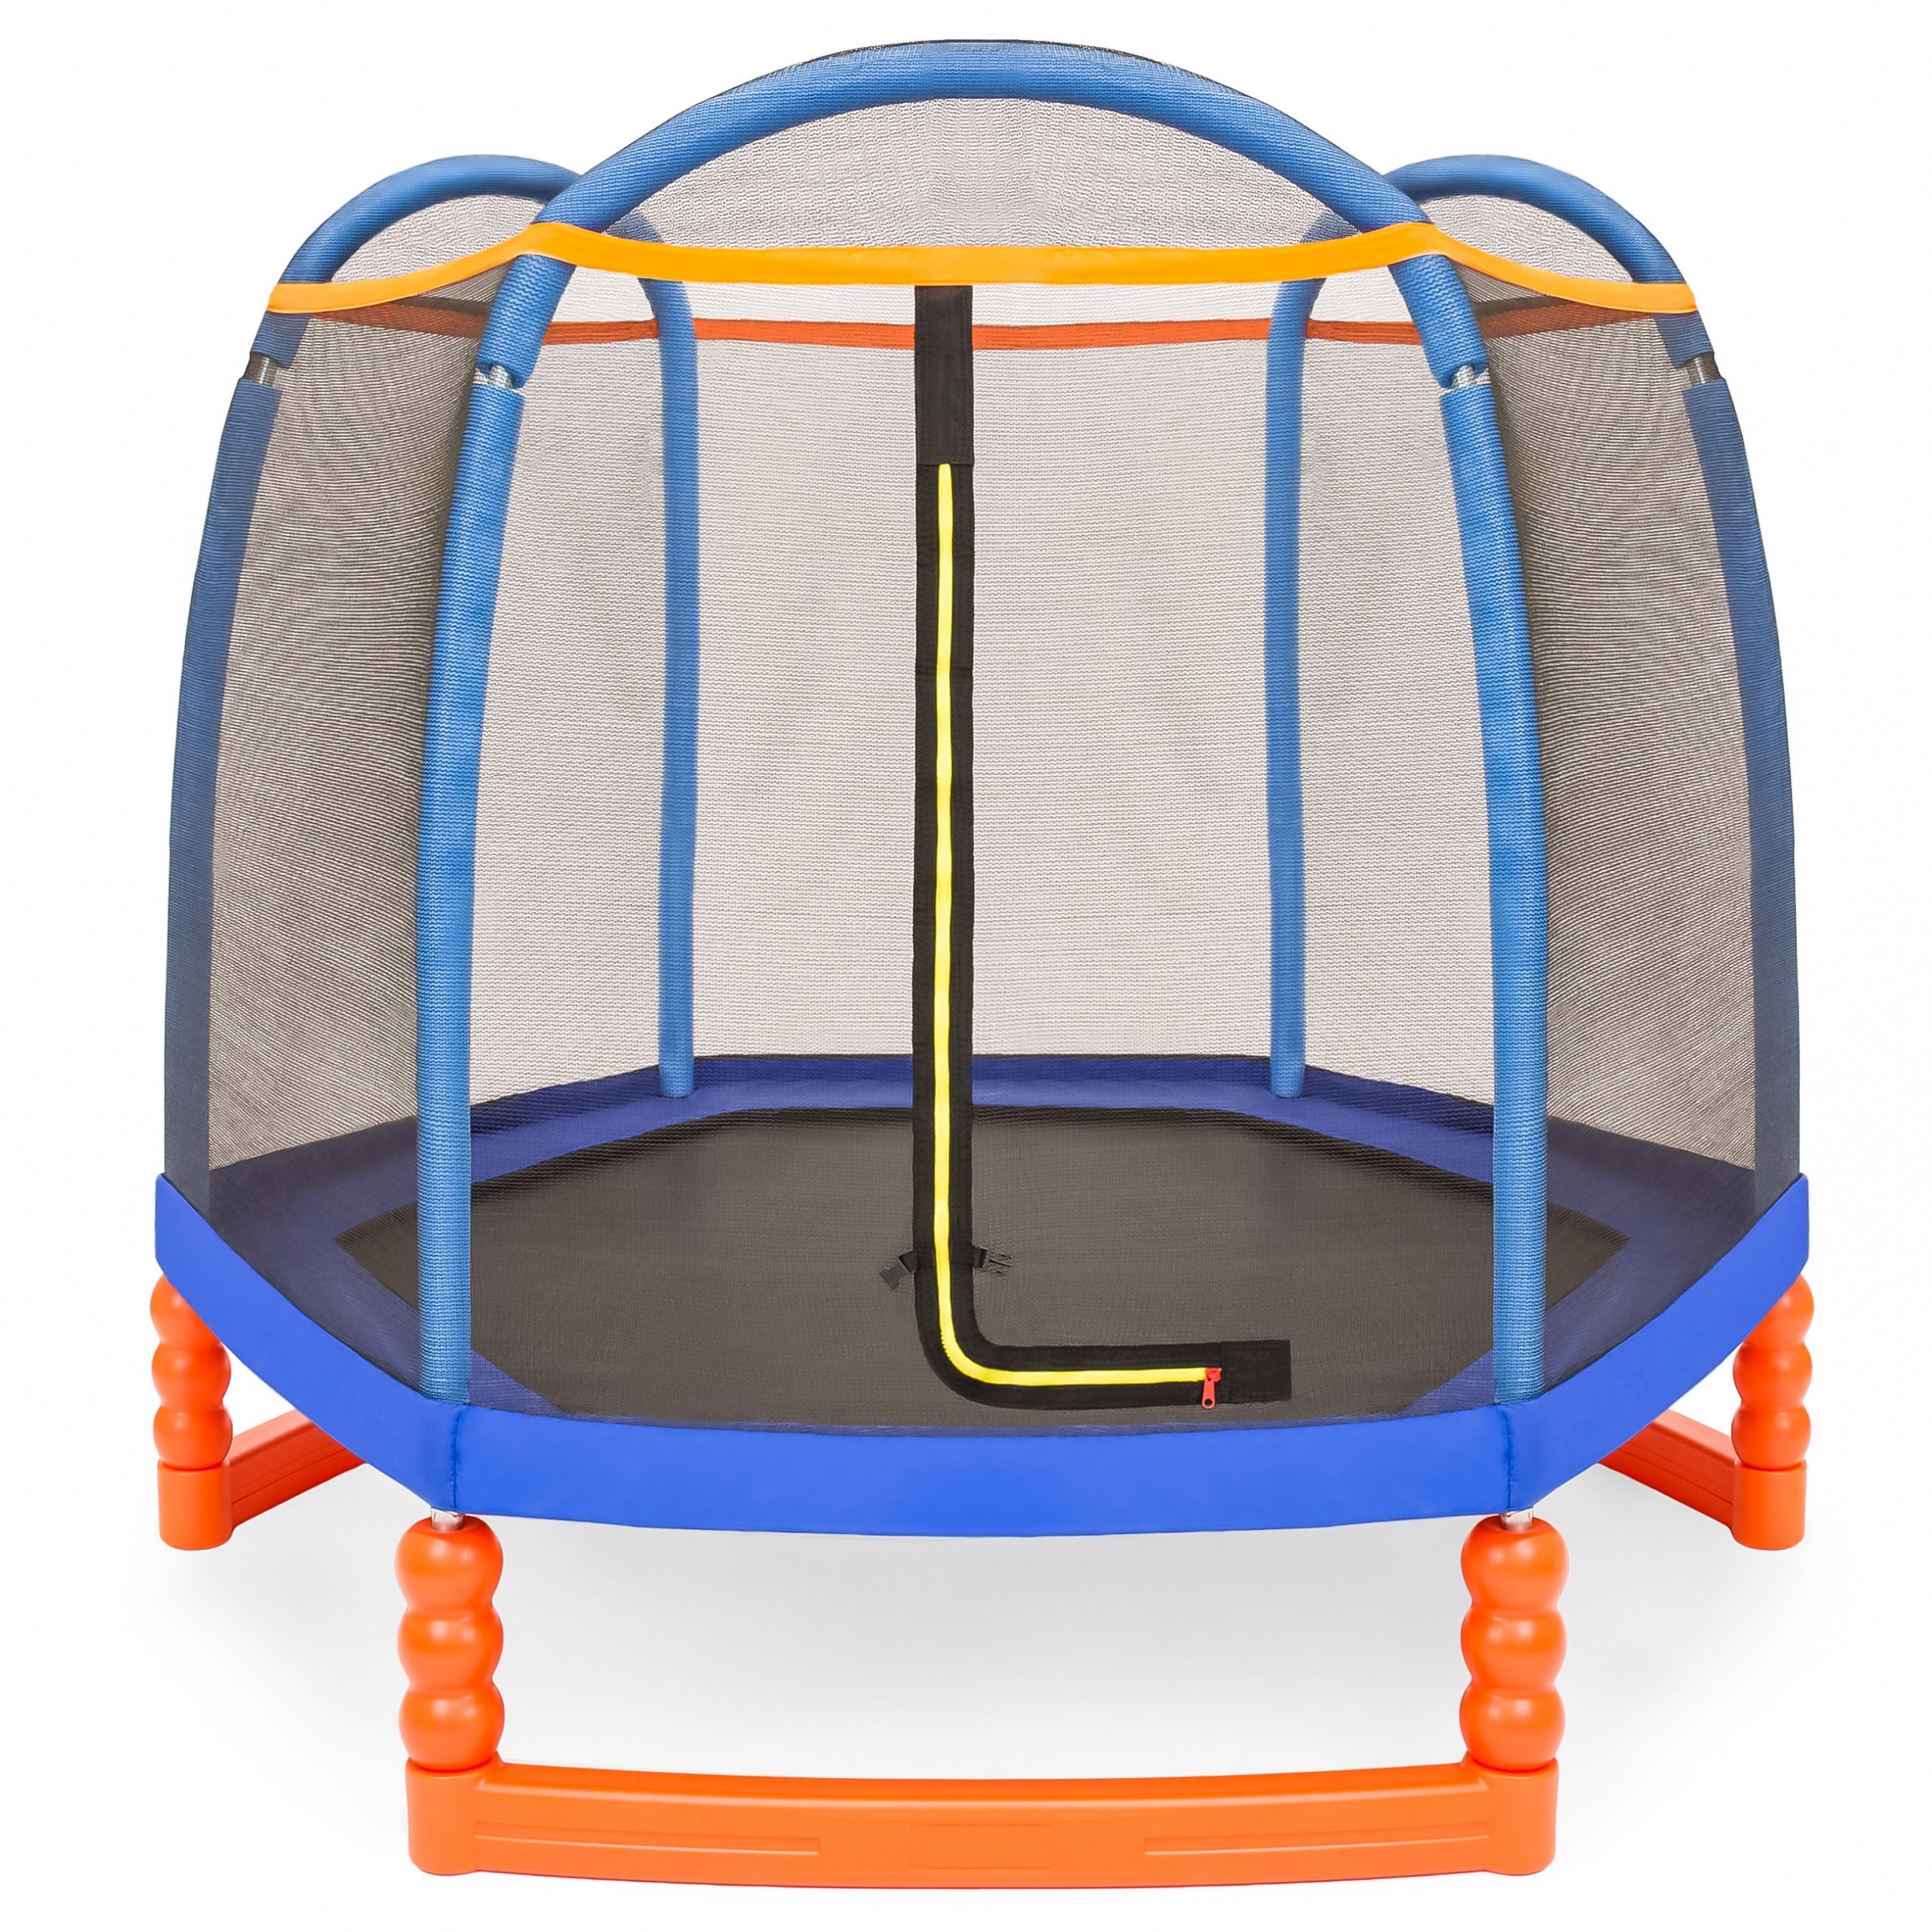 Outdoor Trampoline For Kids
 BCP 7ft Kids Indoor Outdoor Mini Trampoline w Safety Net